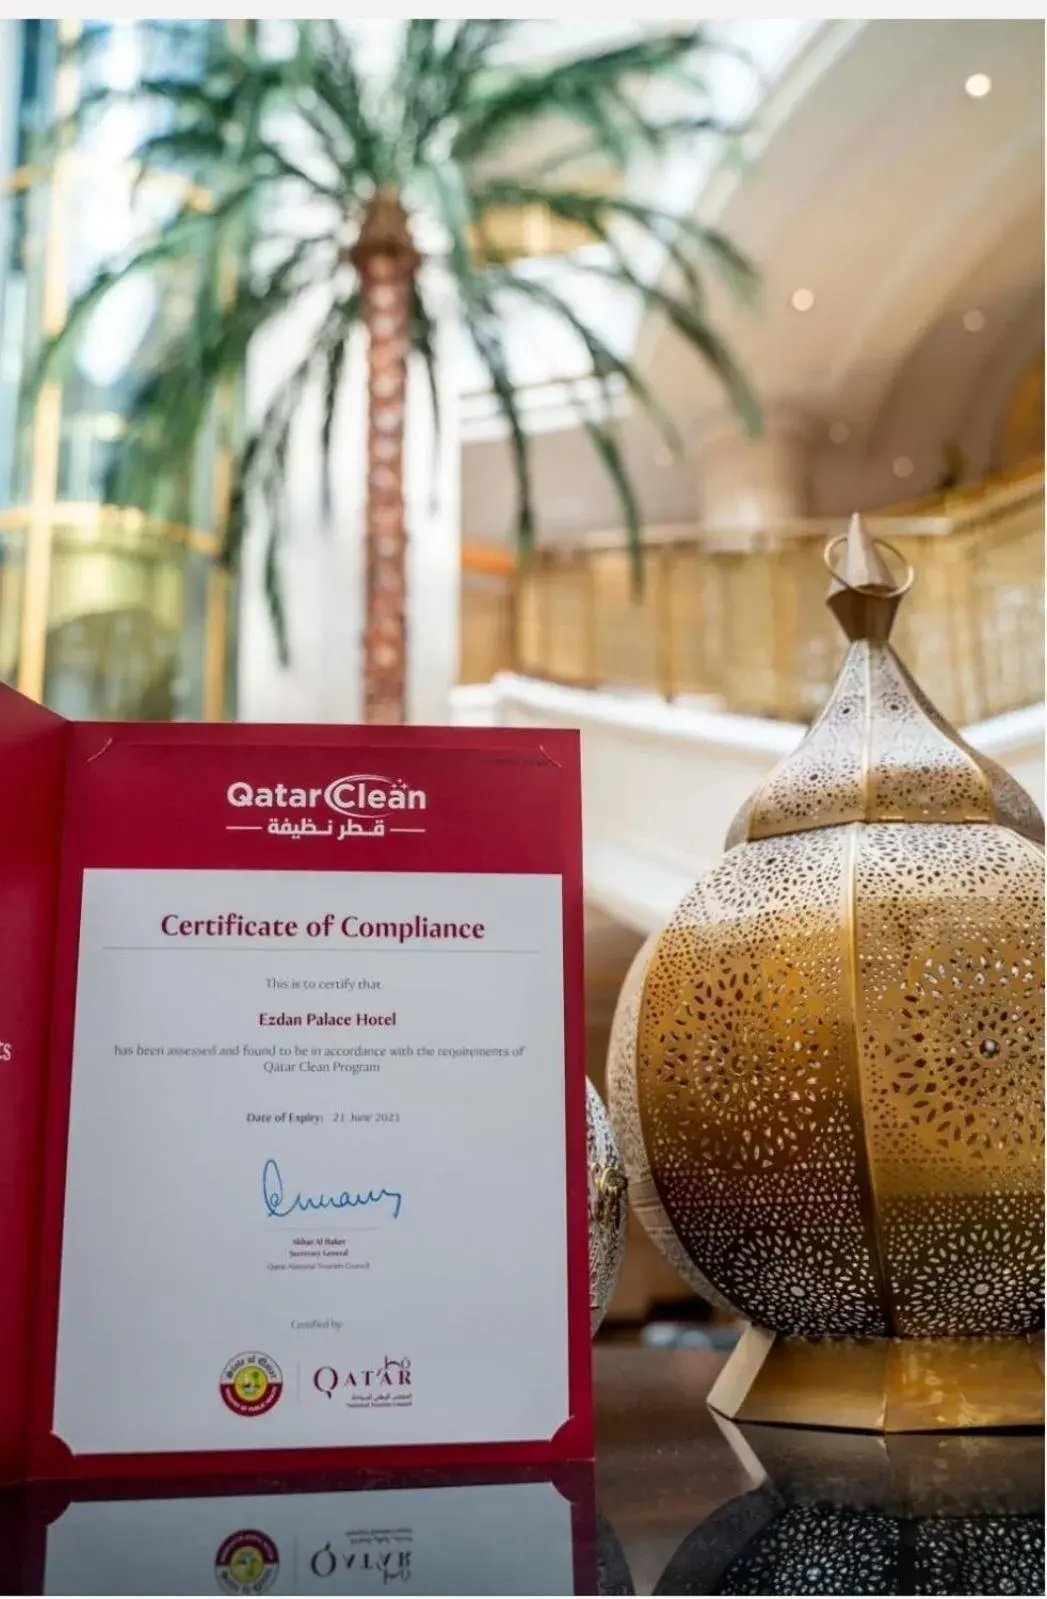 Certificate/Award in Ezdan Palace Hotel